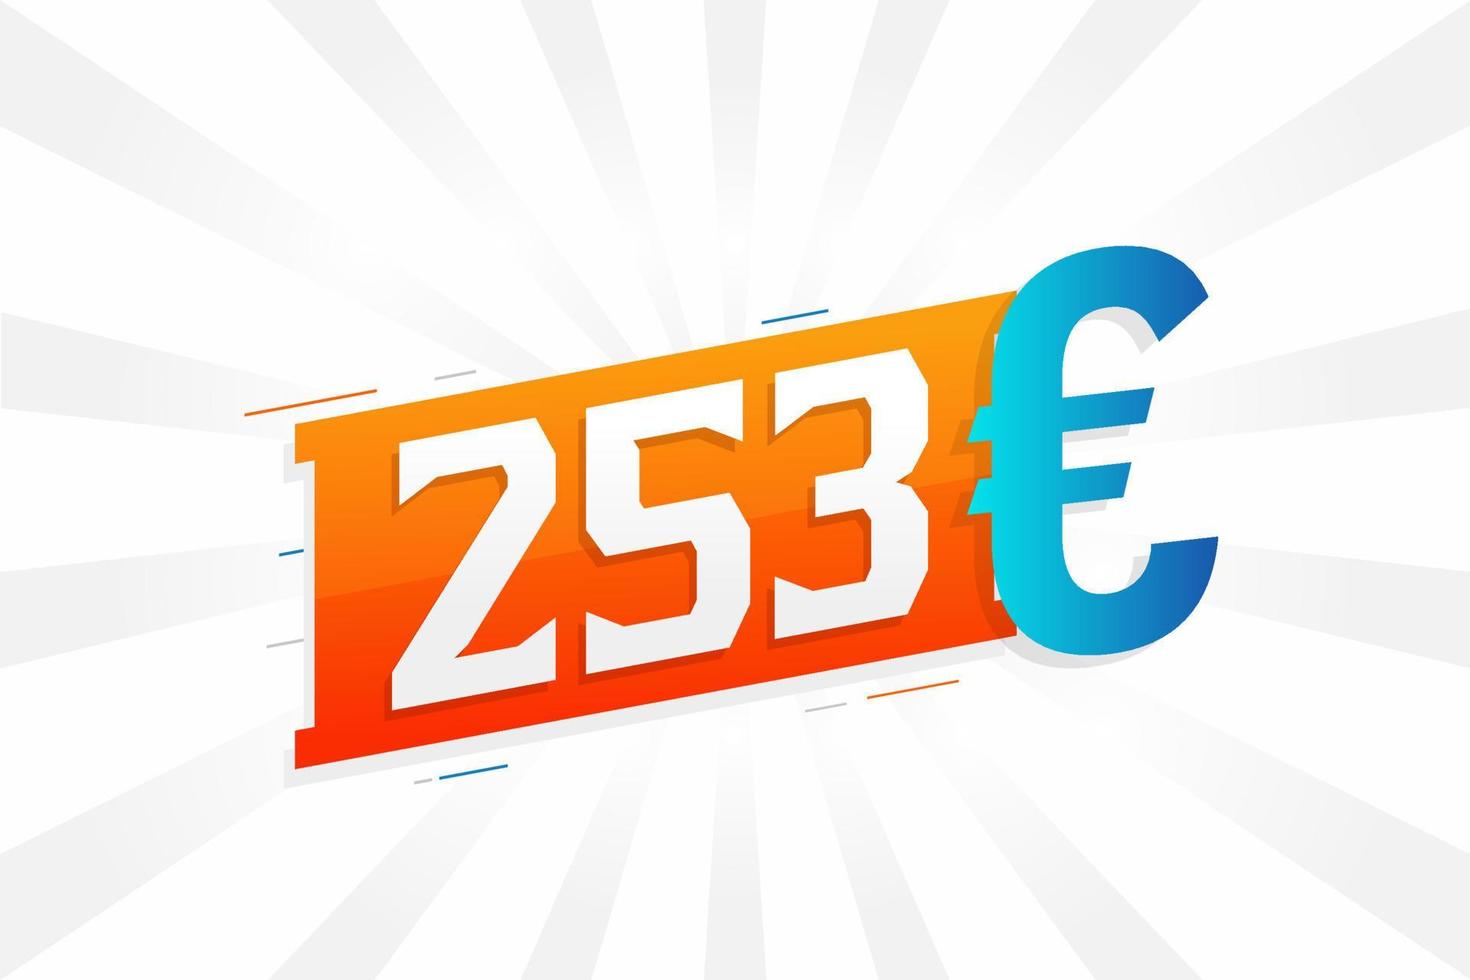 253 euro valuta vektor text symbol. 253 euro europeisk union pengar stock vektor